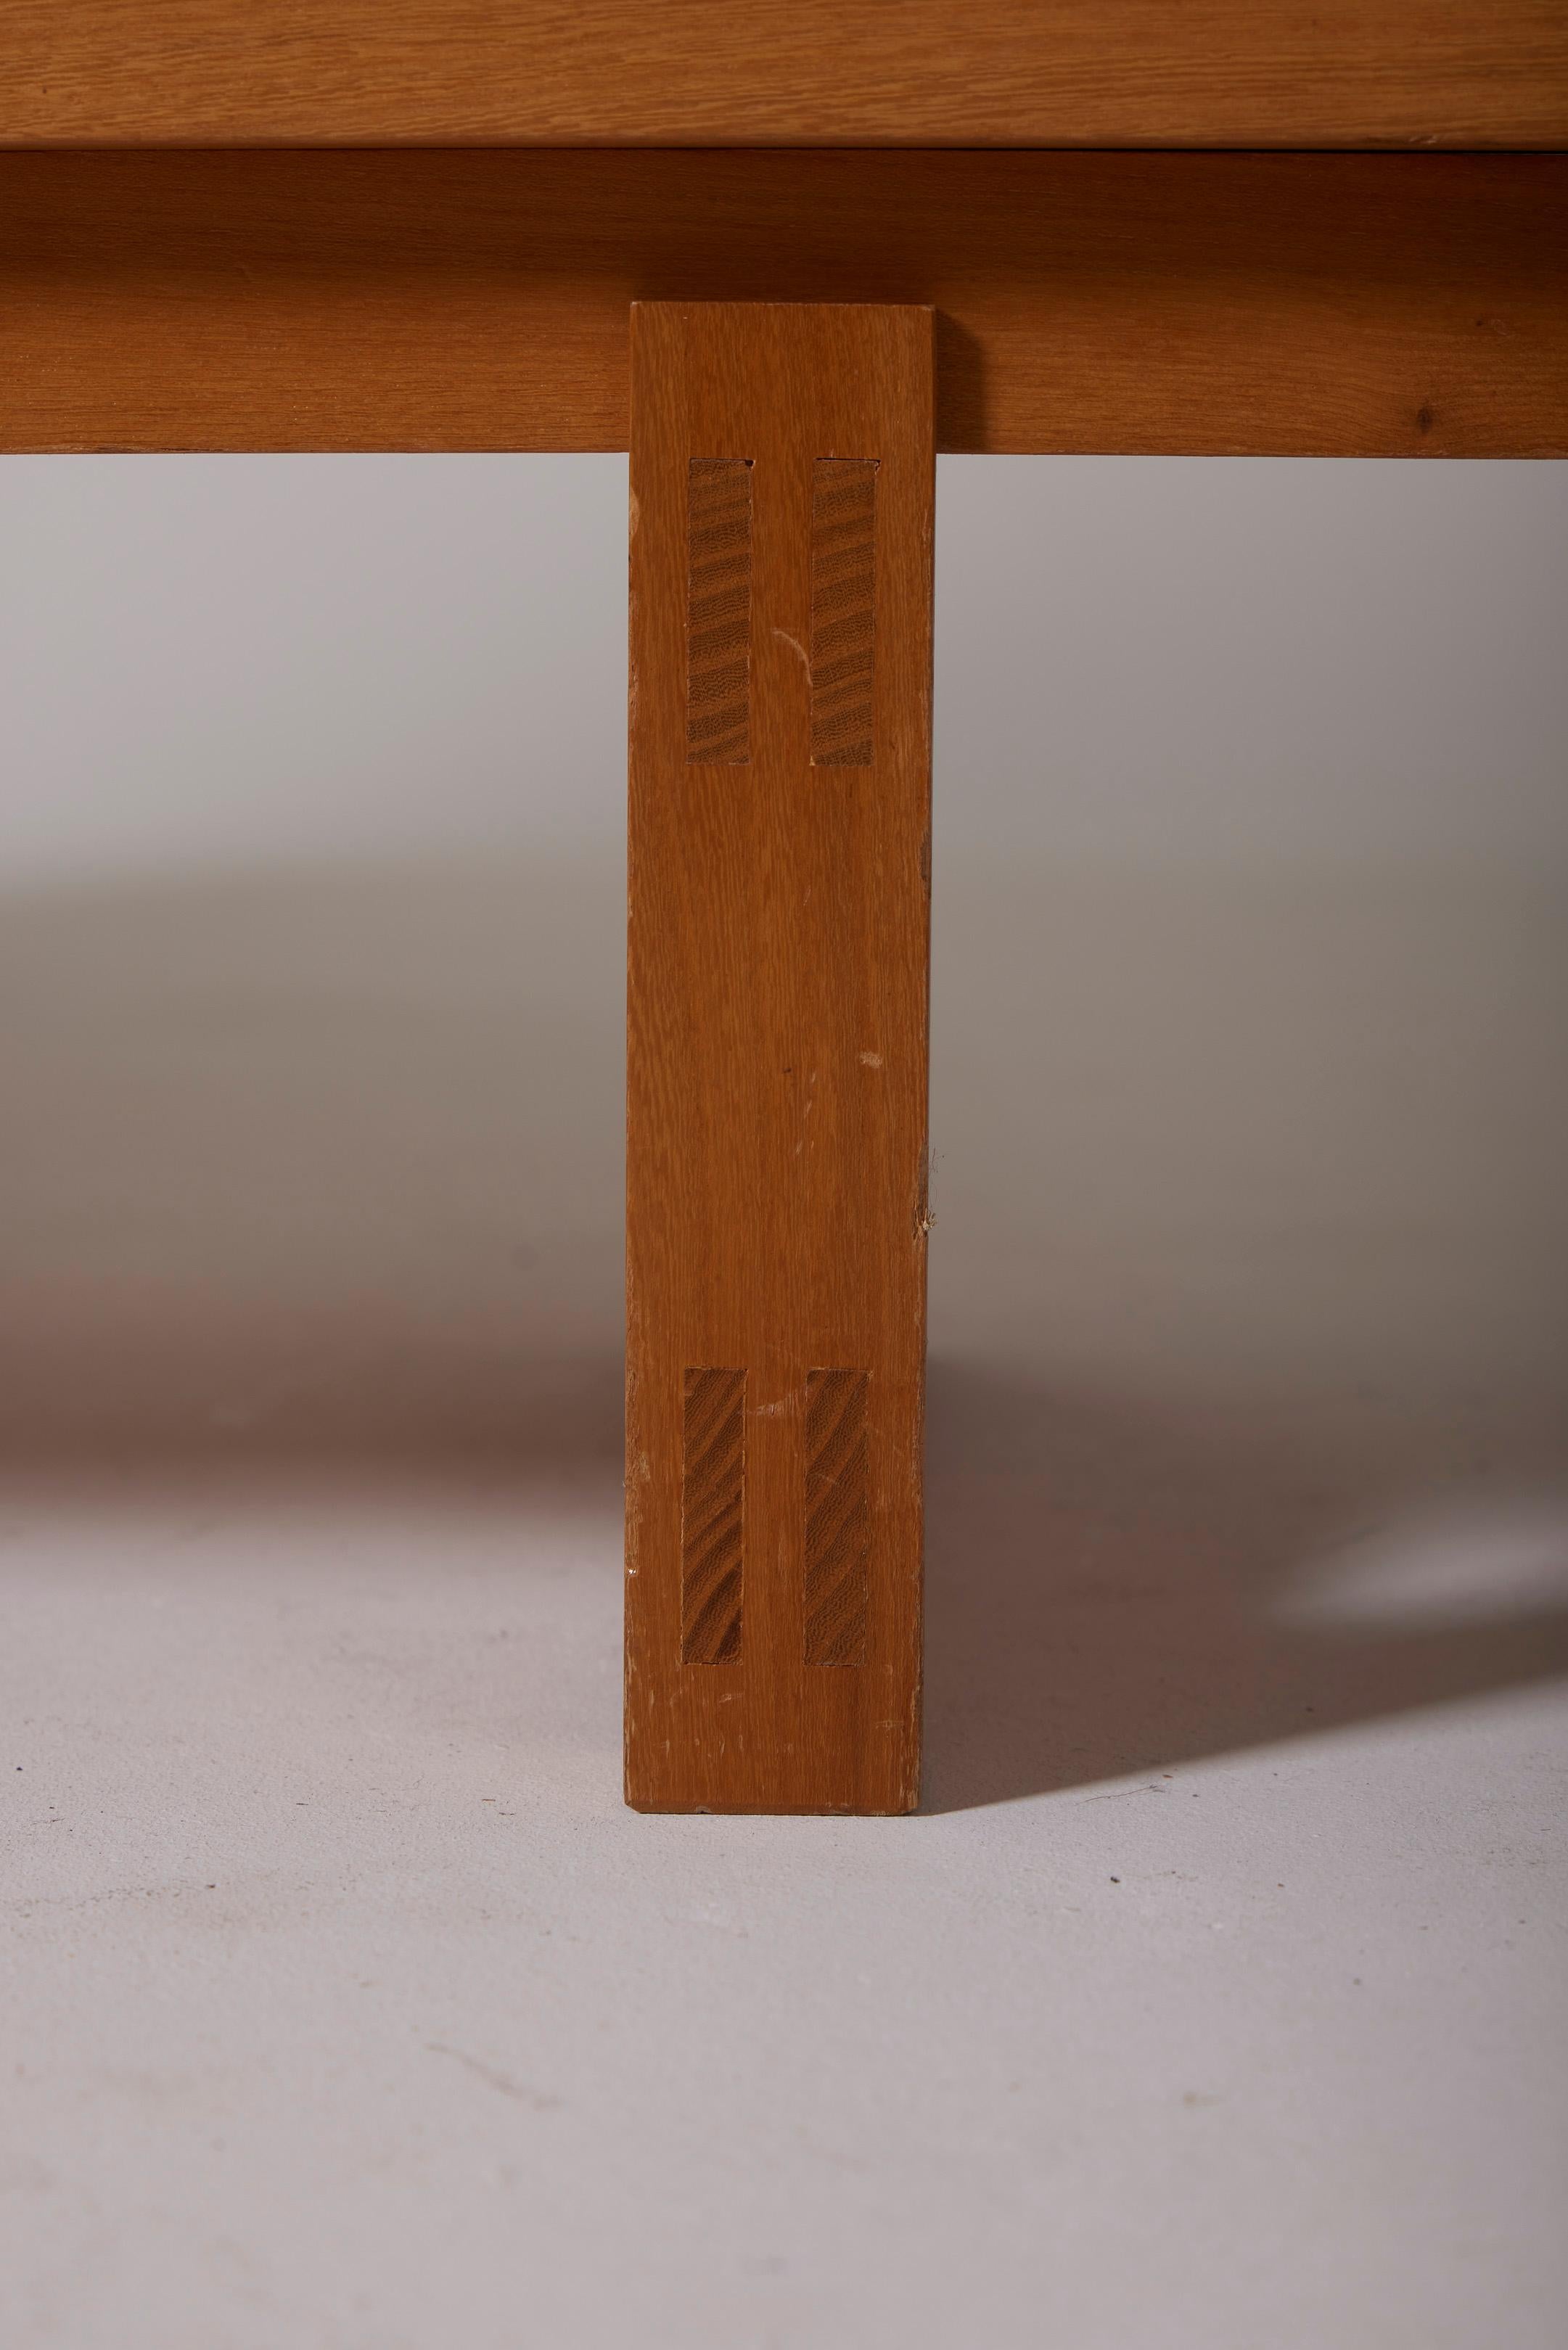  Solid wood sideboard by Maison Regain 11